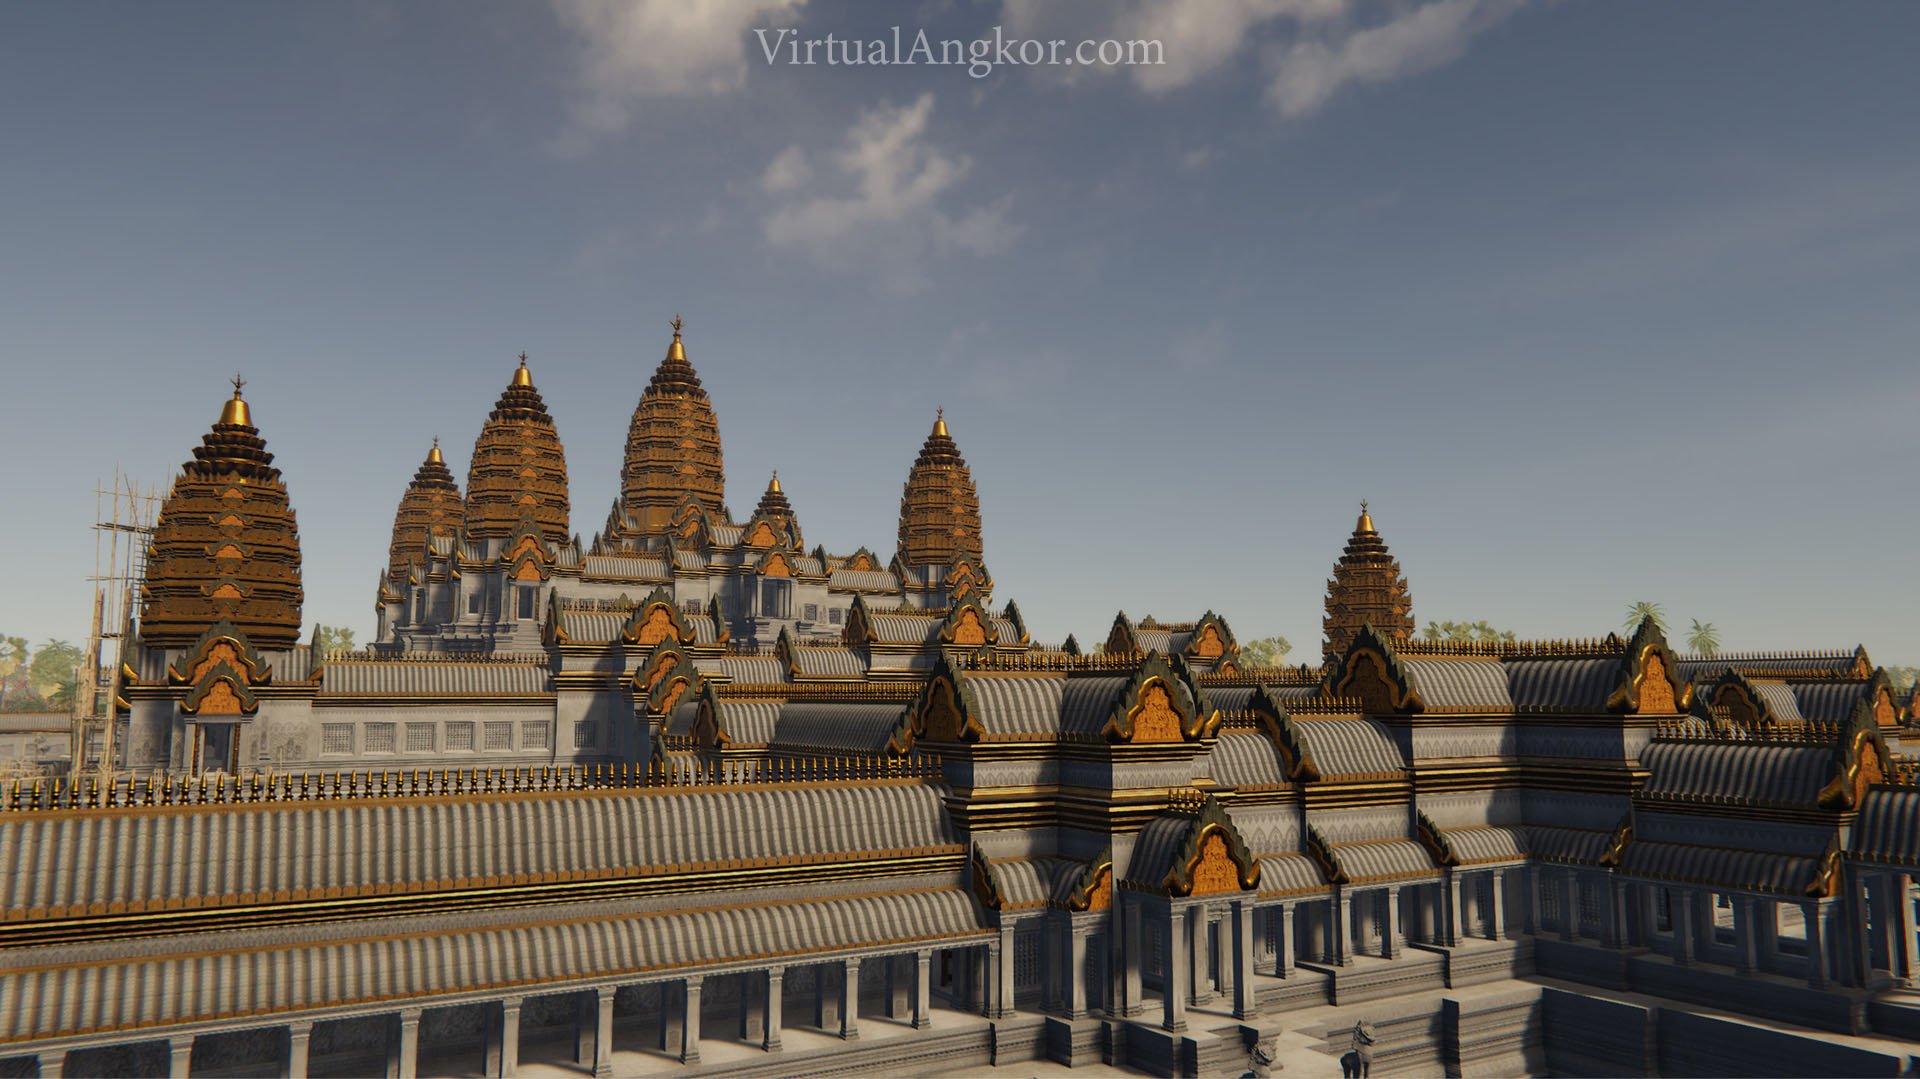 Angkor Wat gilded plaster